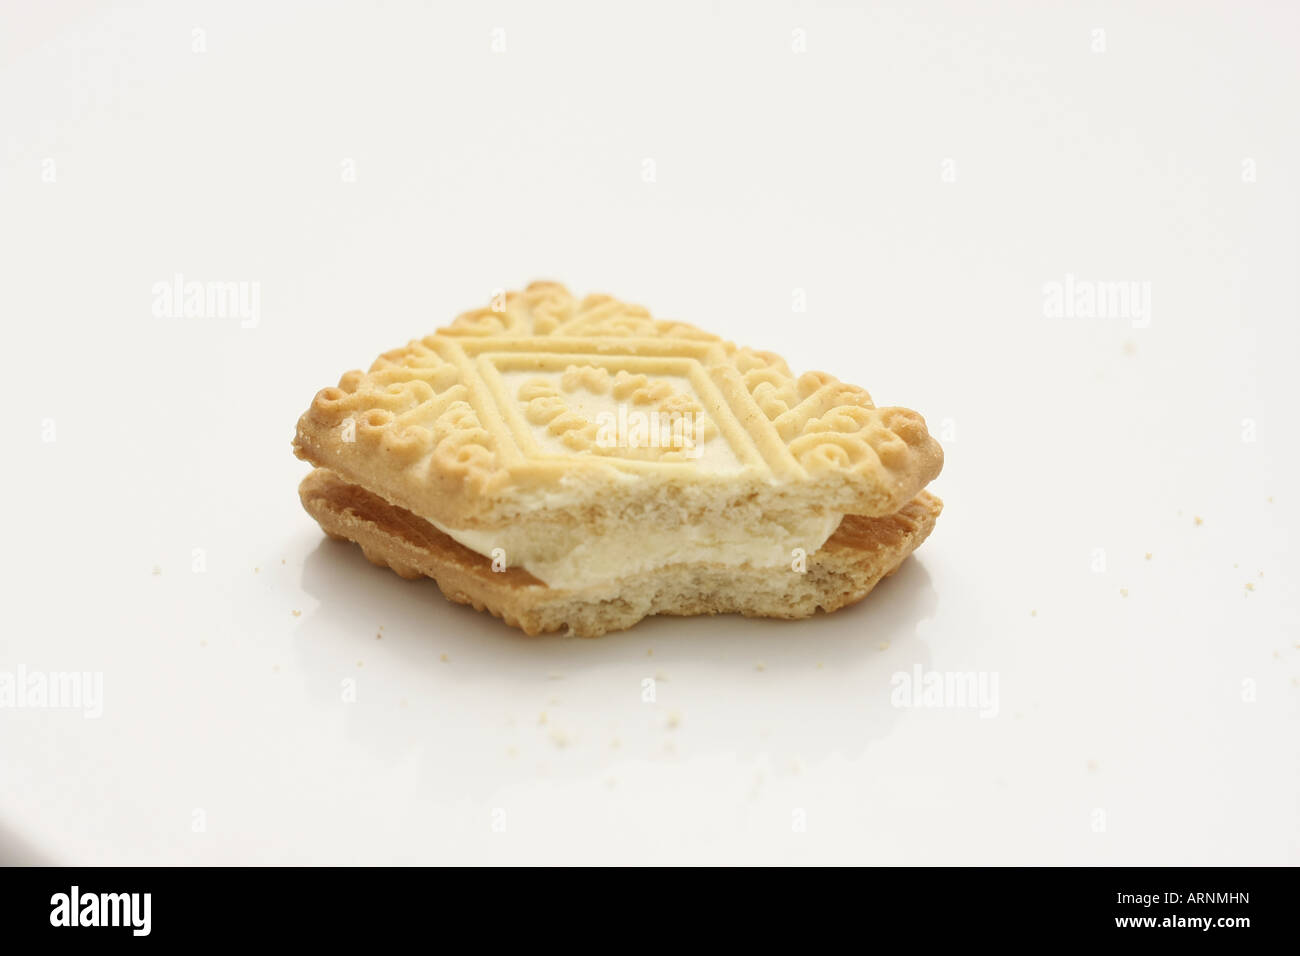 One half-eaten Custard Cream biscuit on a white plate Stock Photo